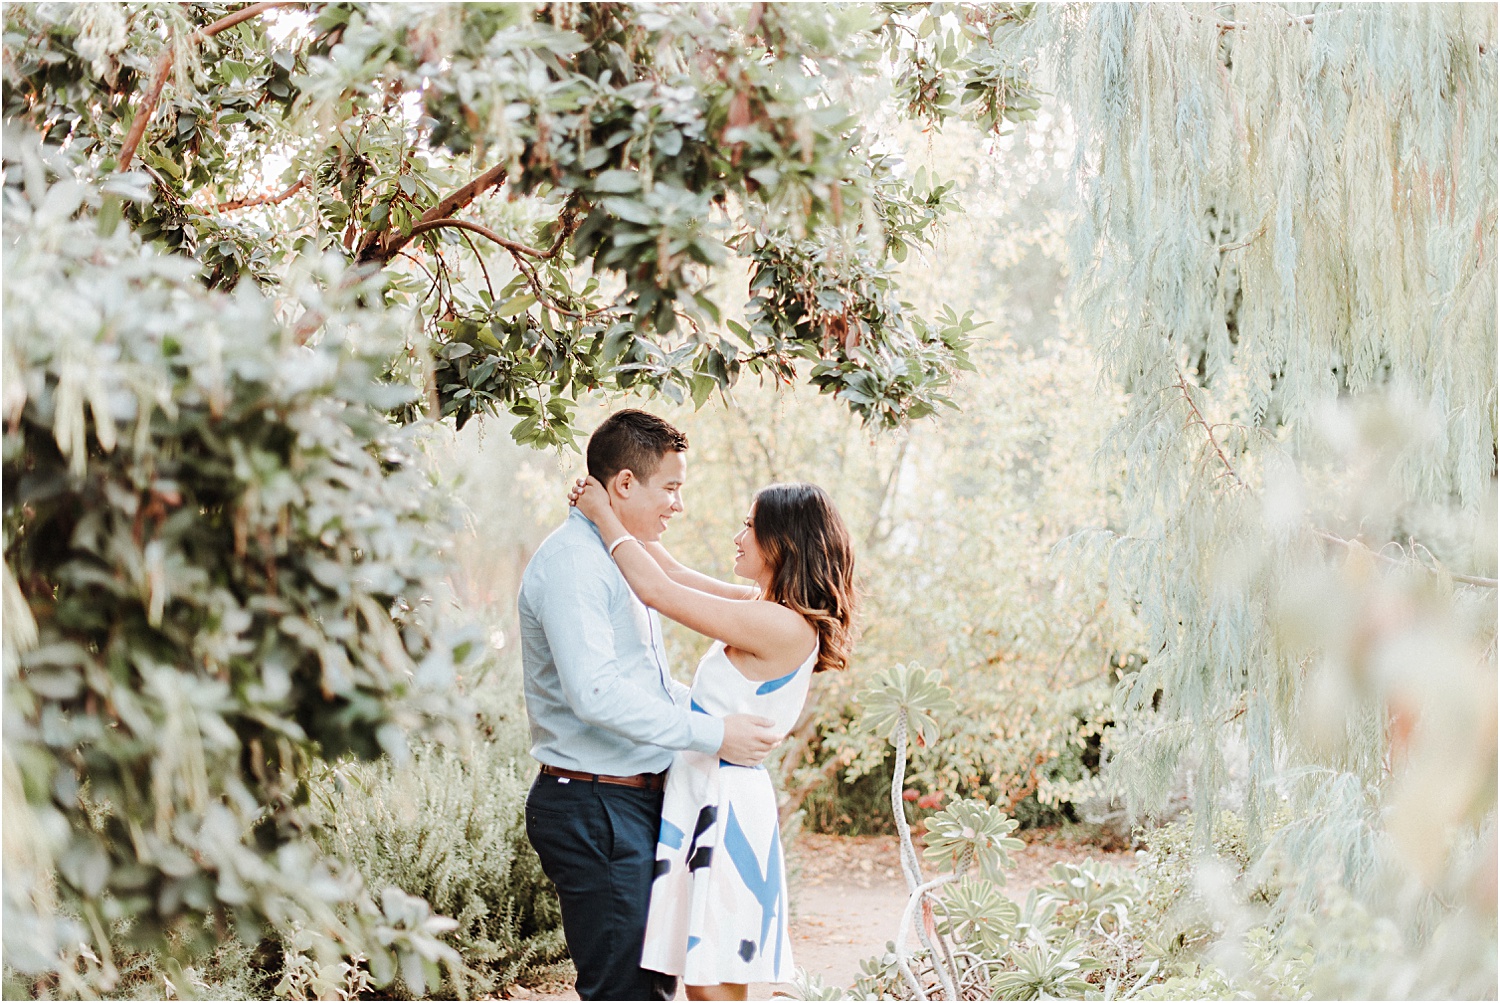 Bianca+Grant - Arlington Gardens - Pasadena - Engagement_0016.jpg